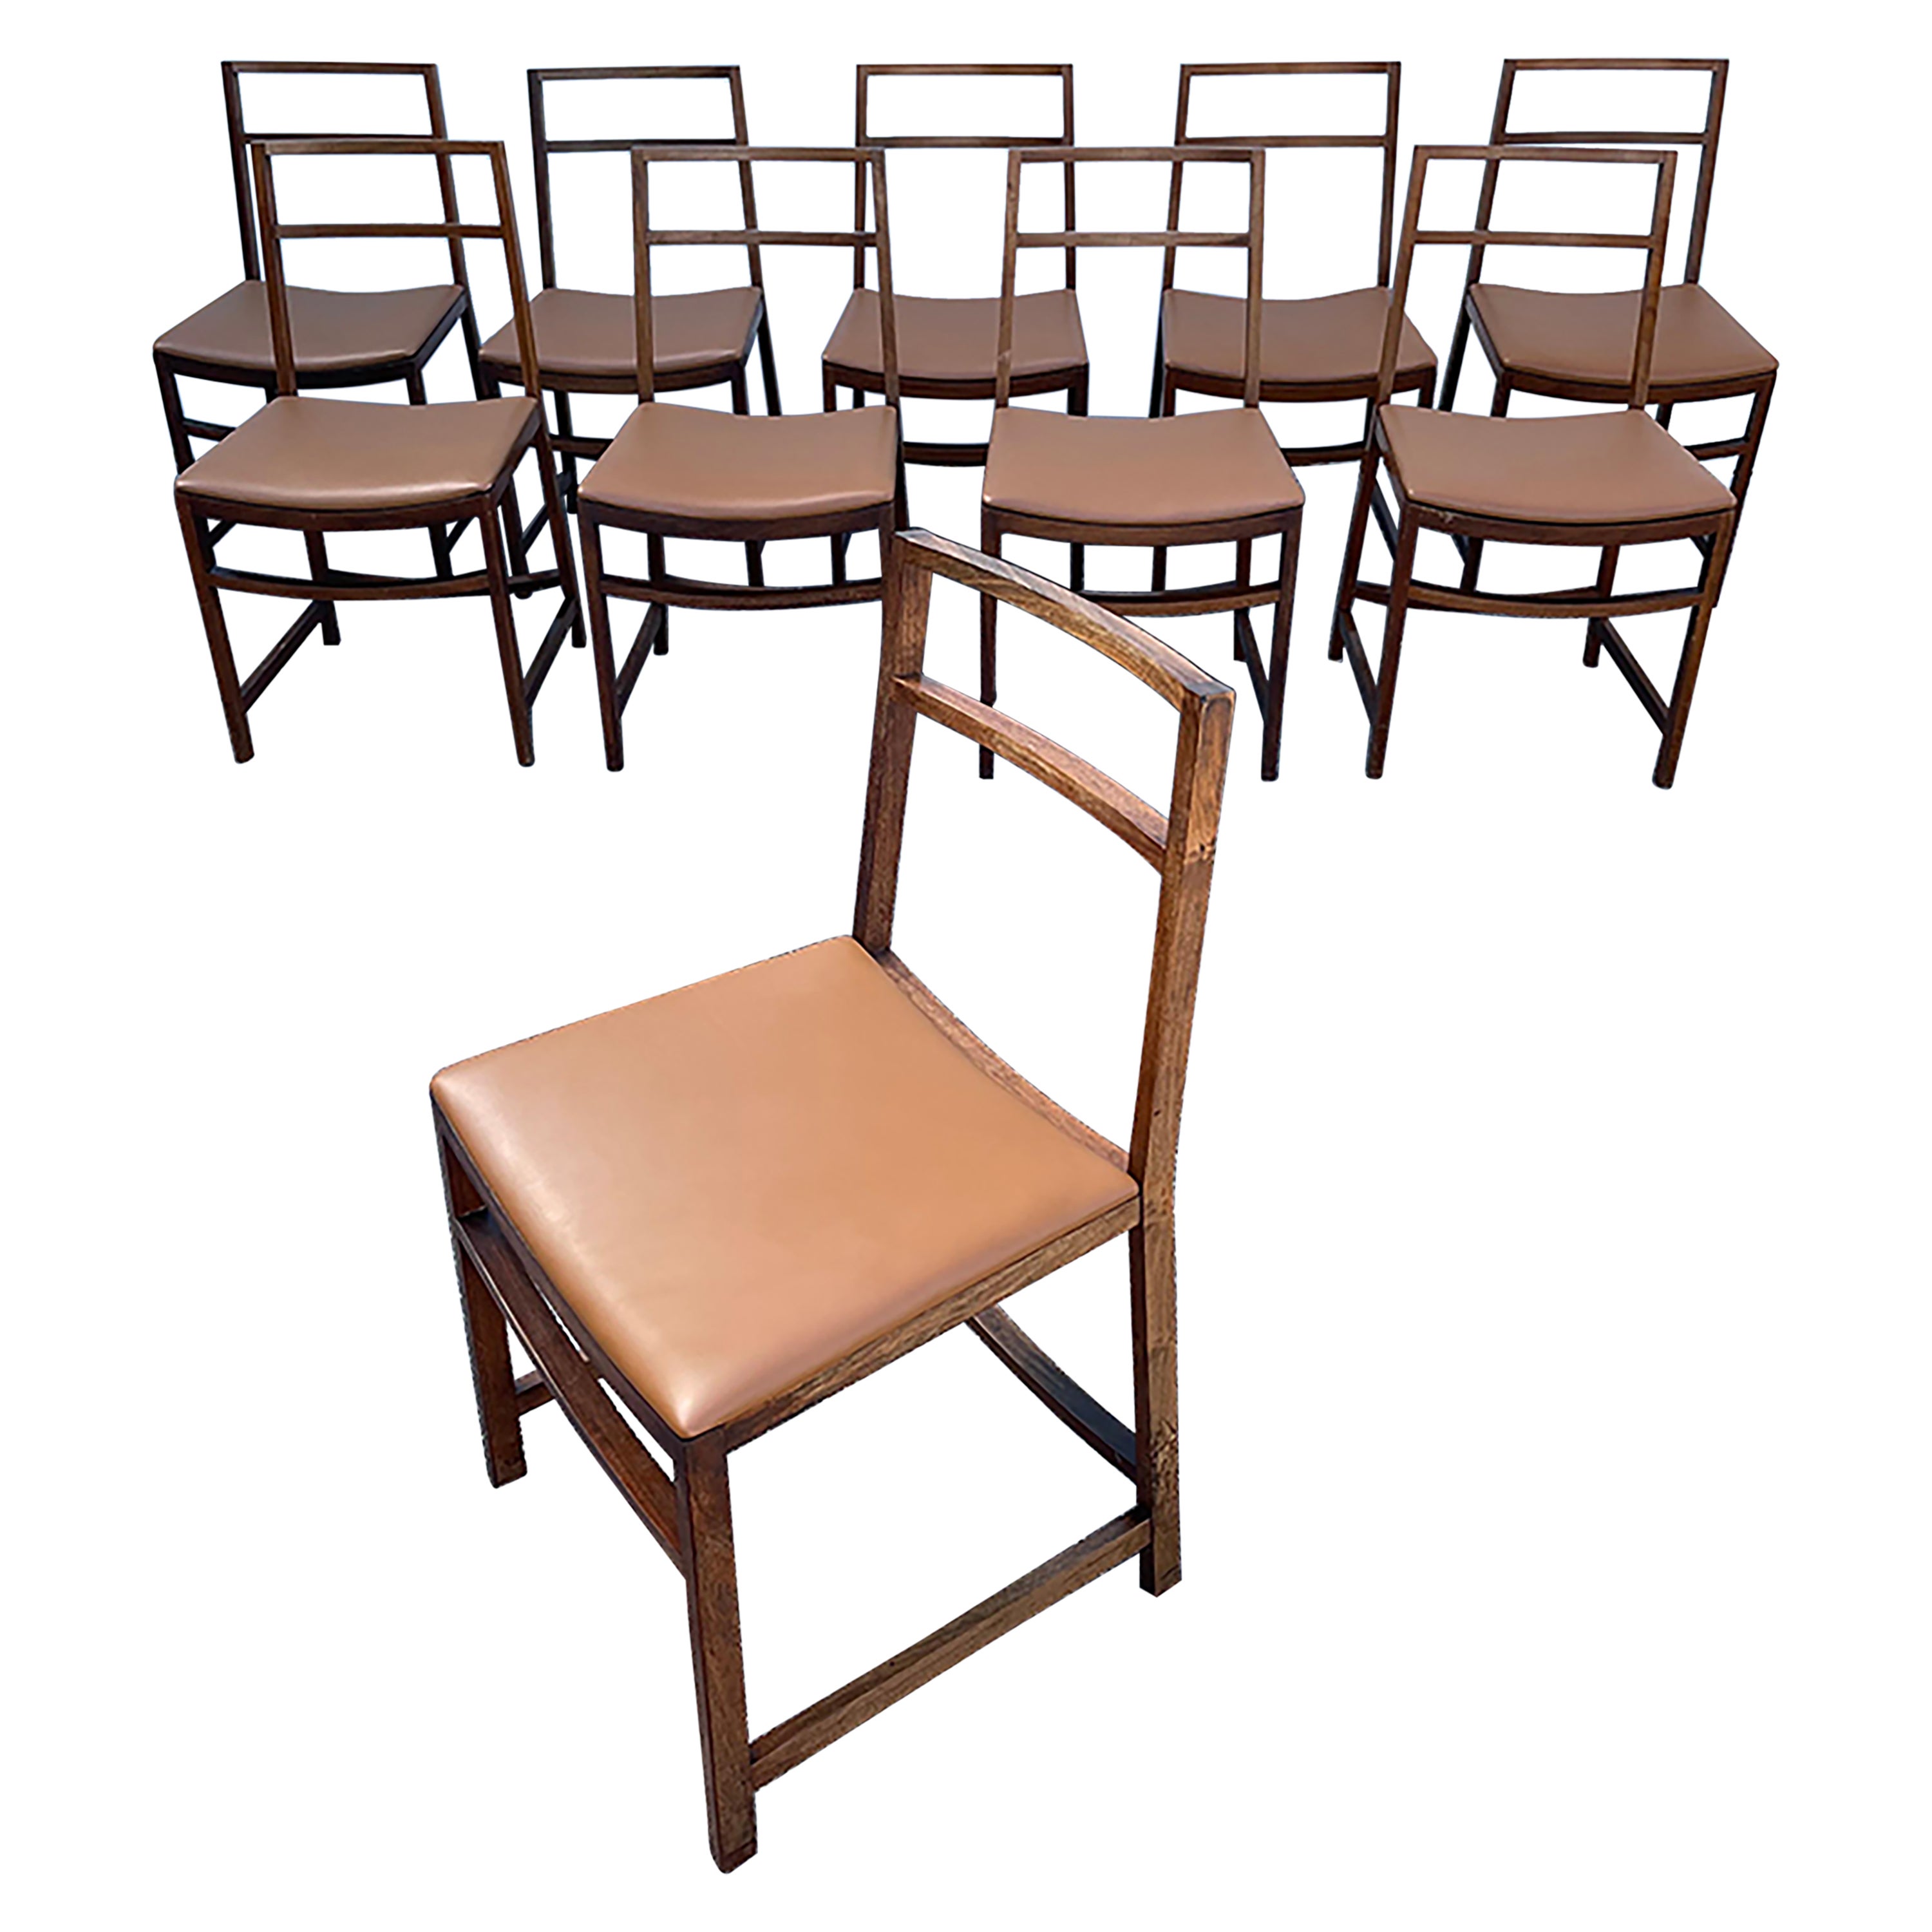 MIM Roma Dining Room Chairs